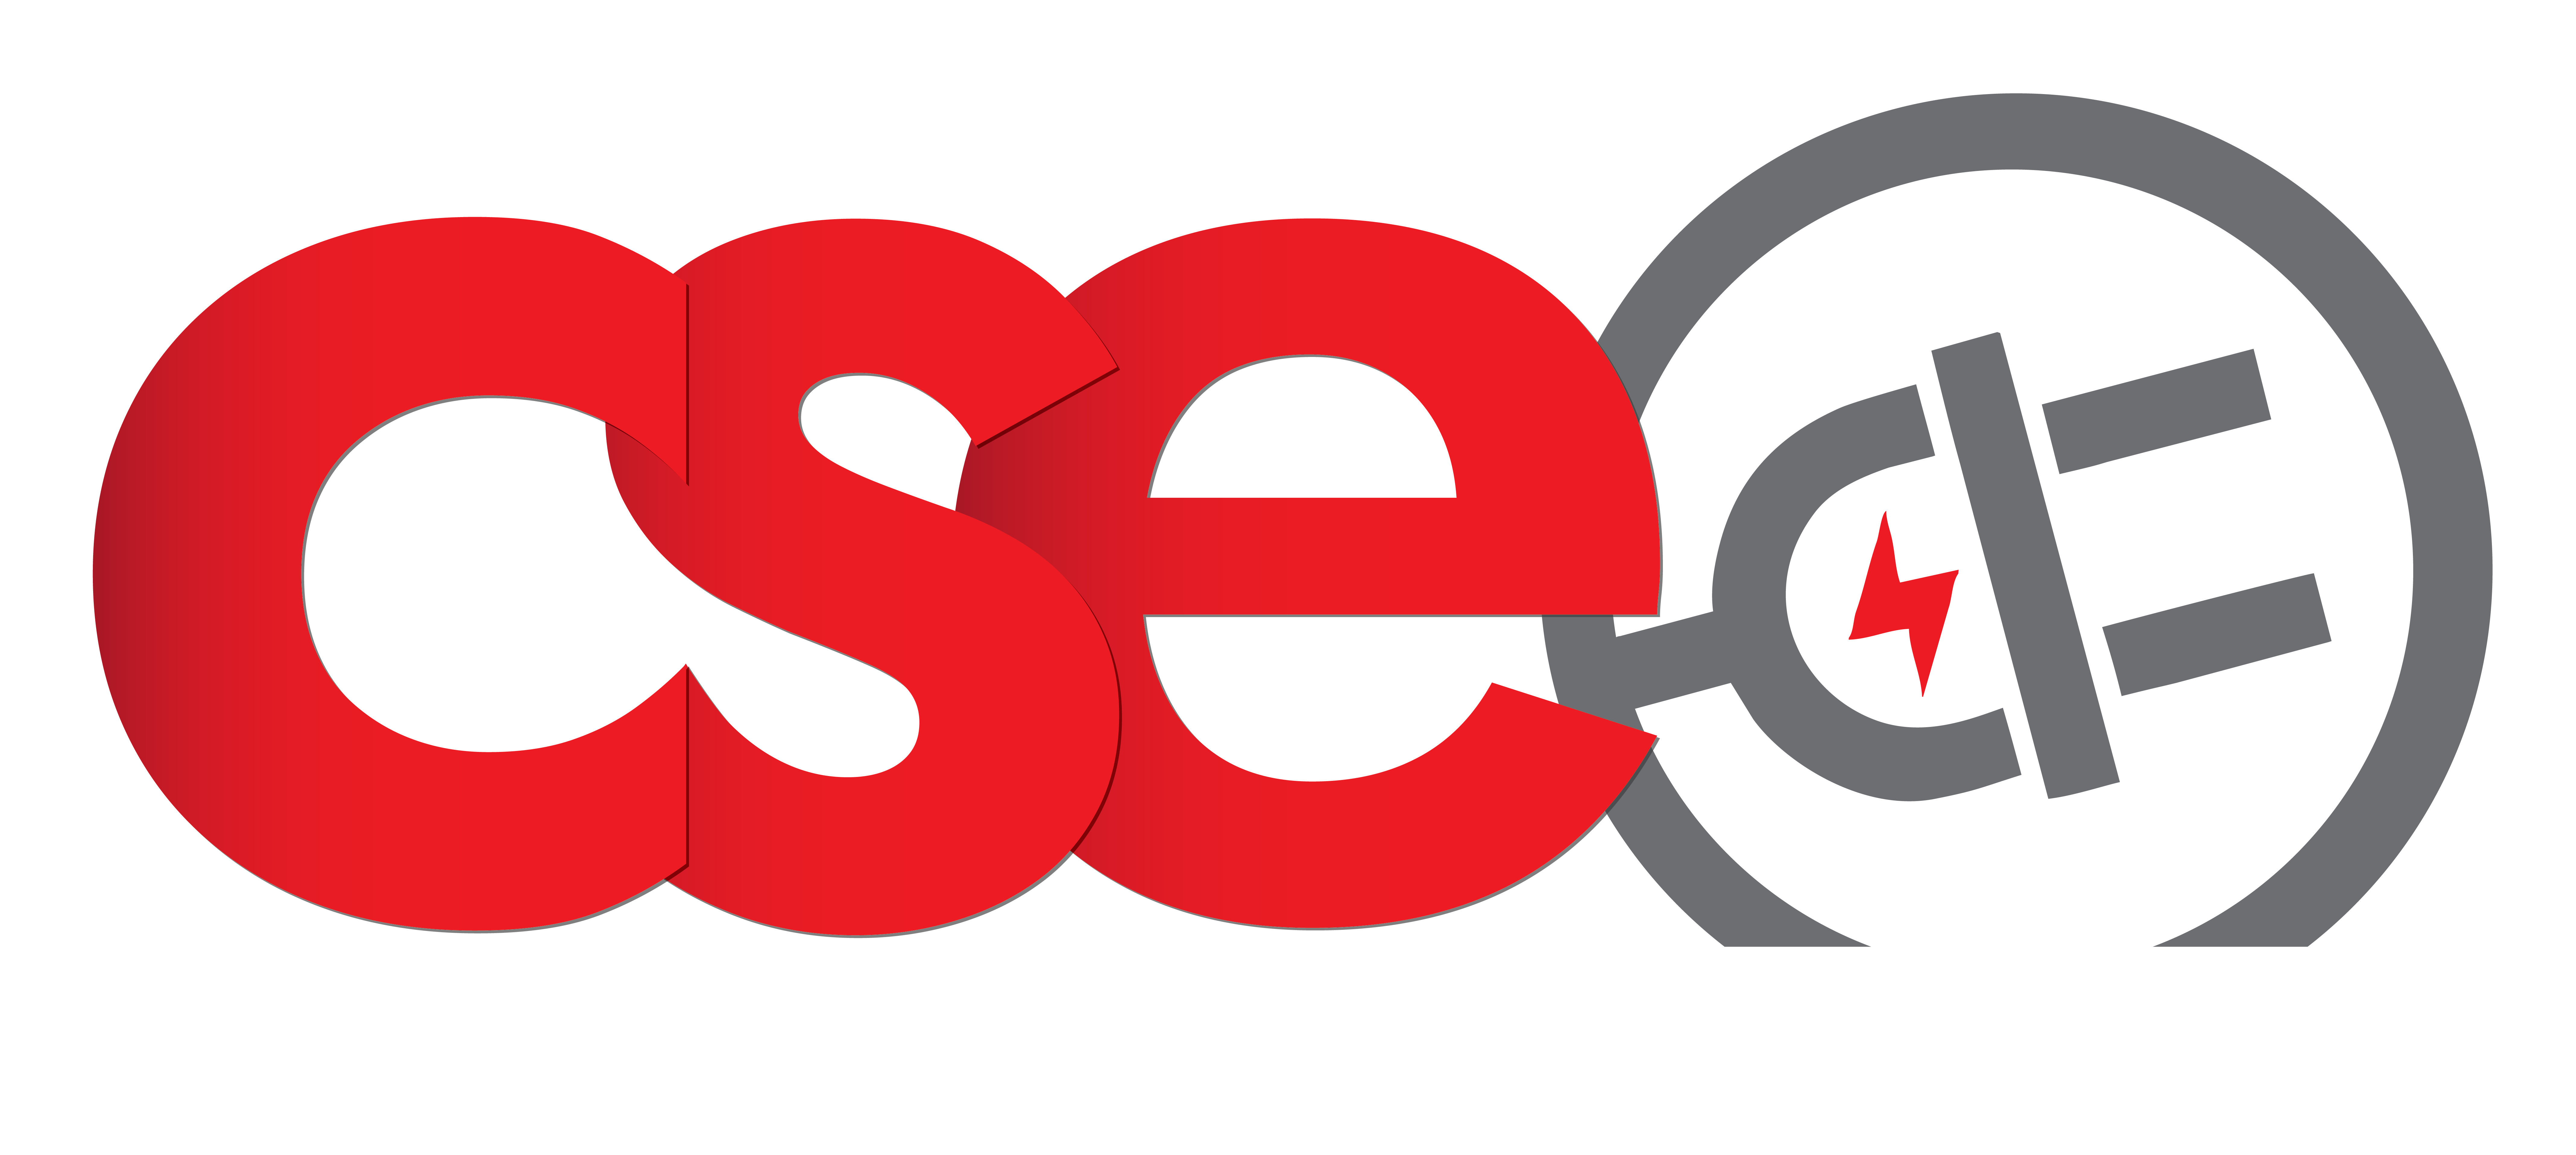 CSE logo NEW dark background-01